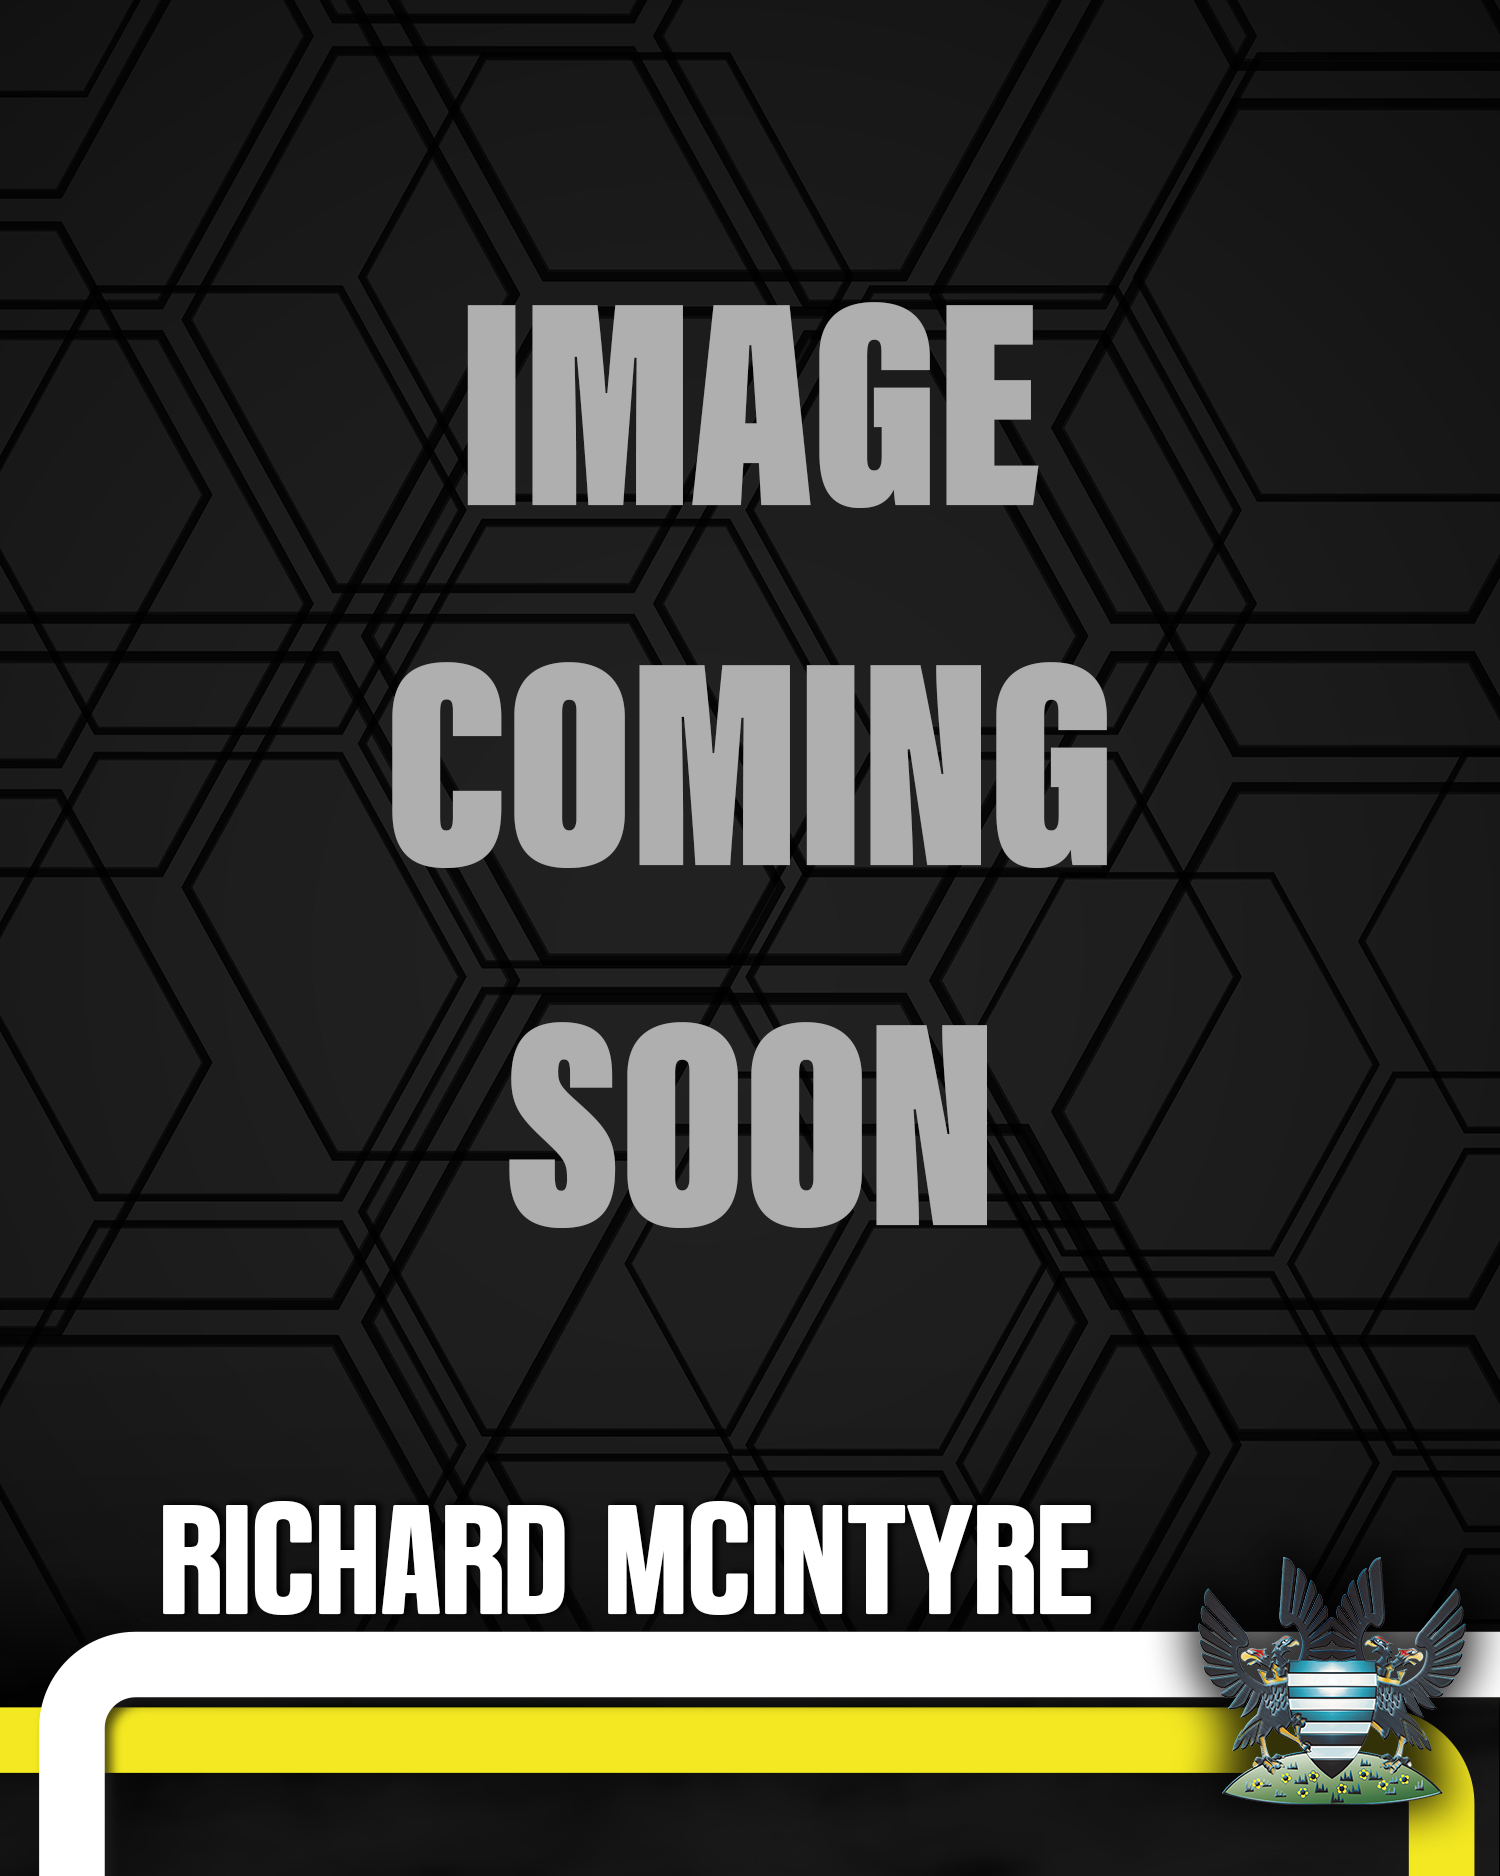 Richard McIntyre